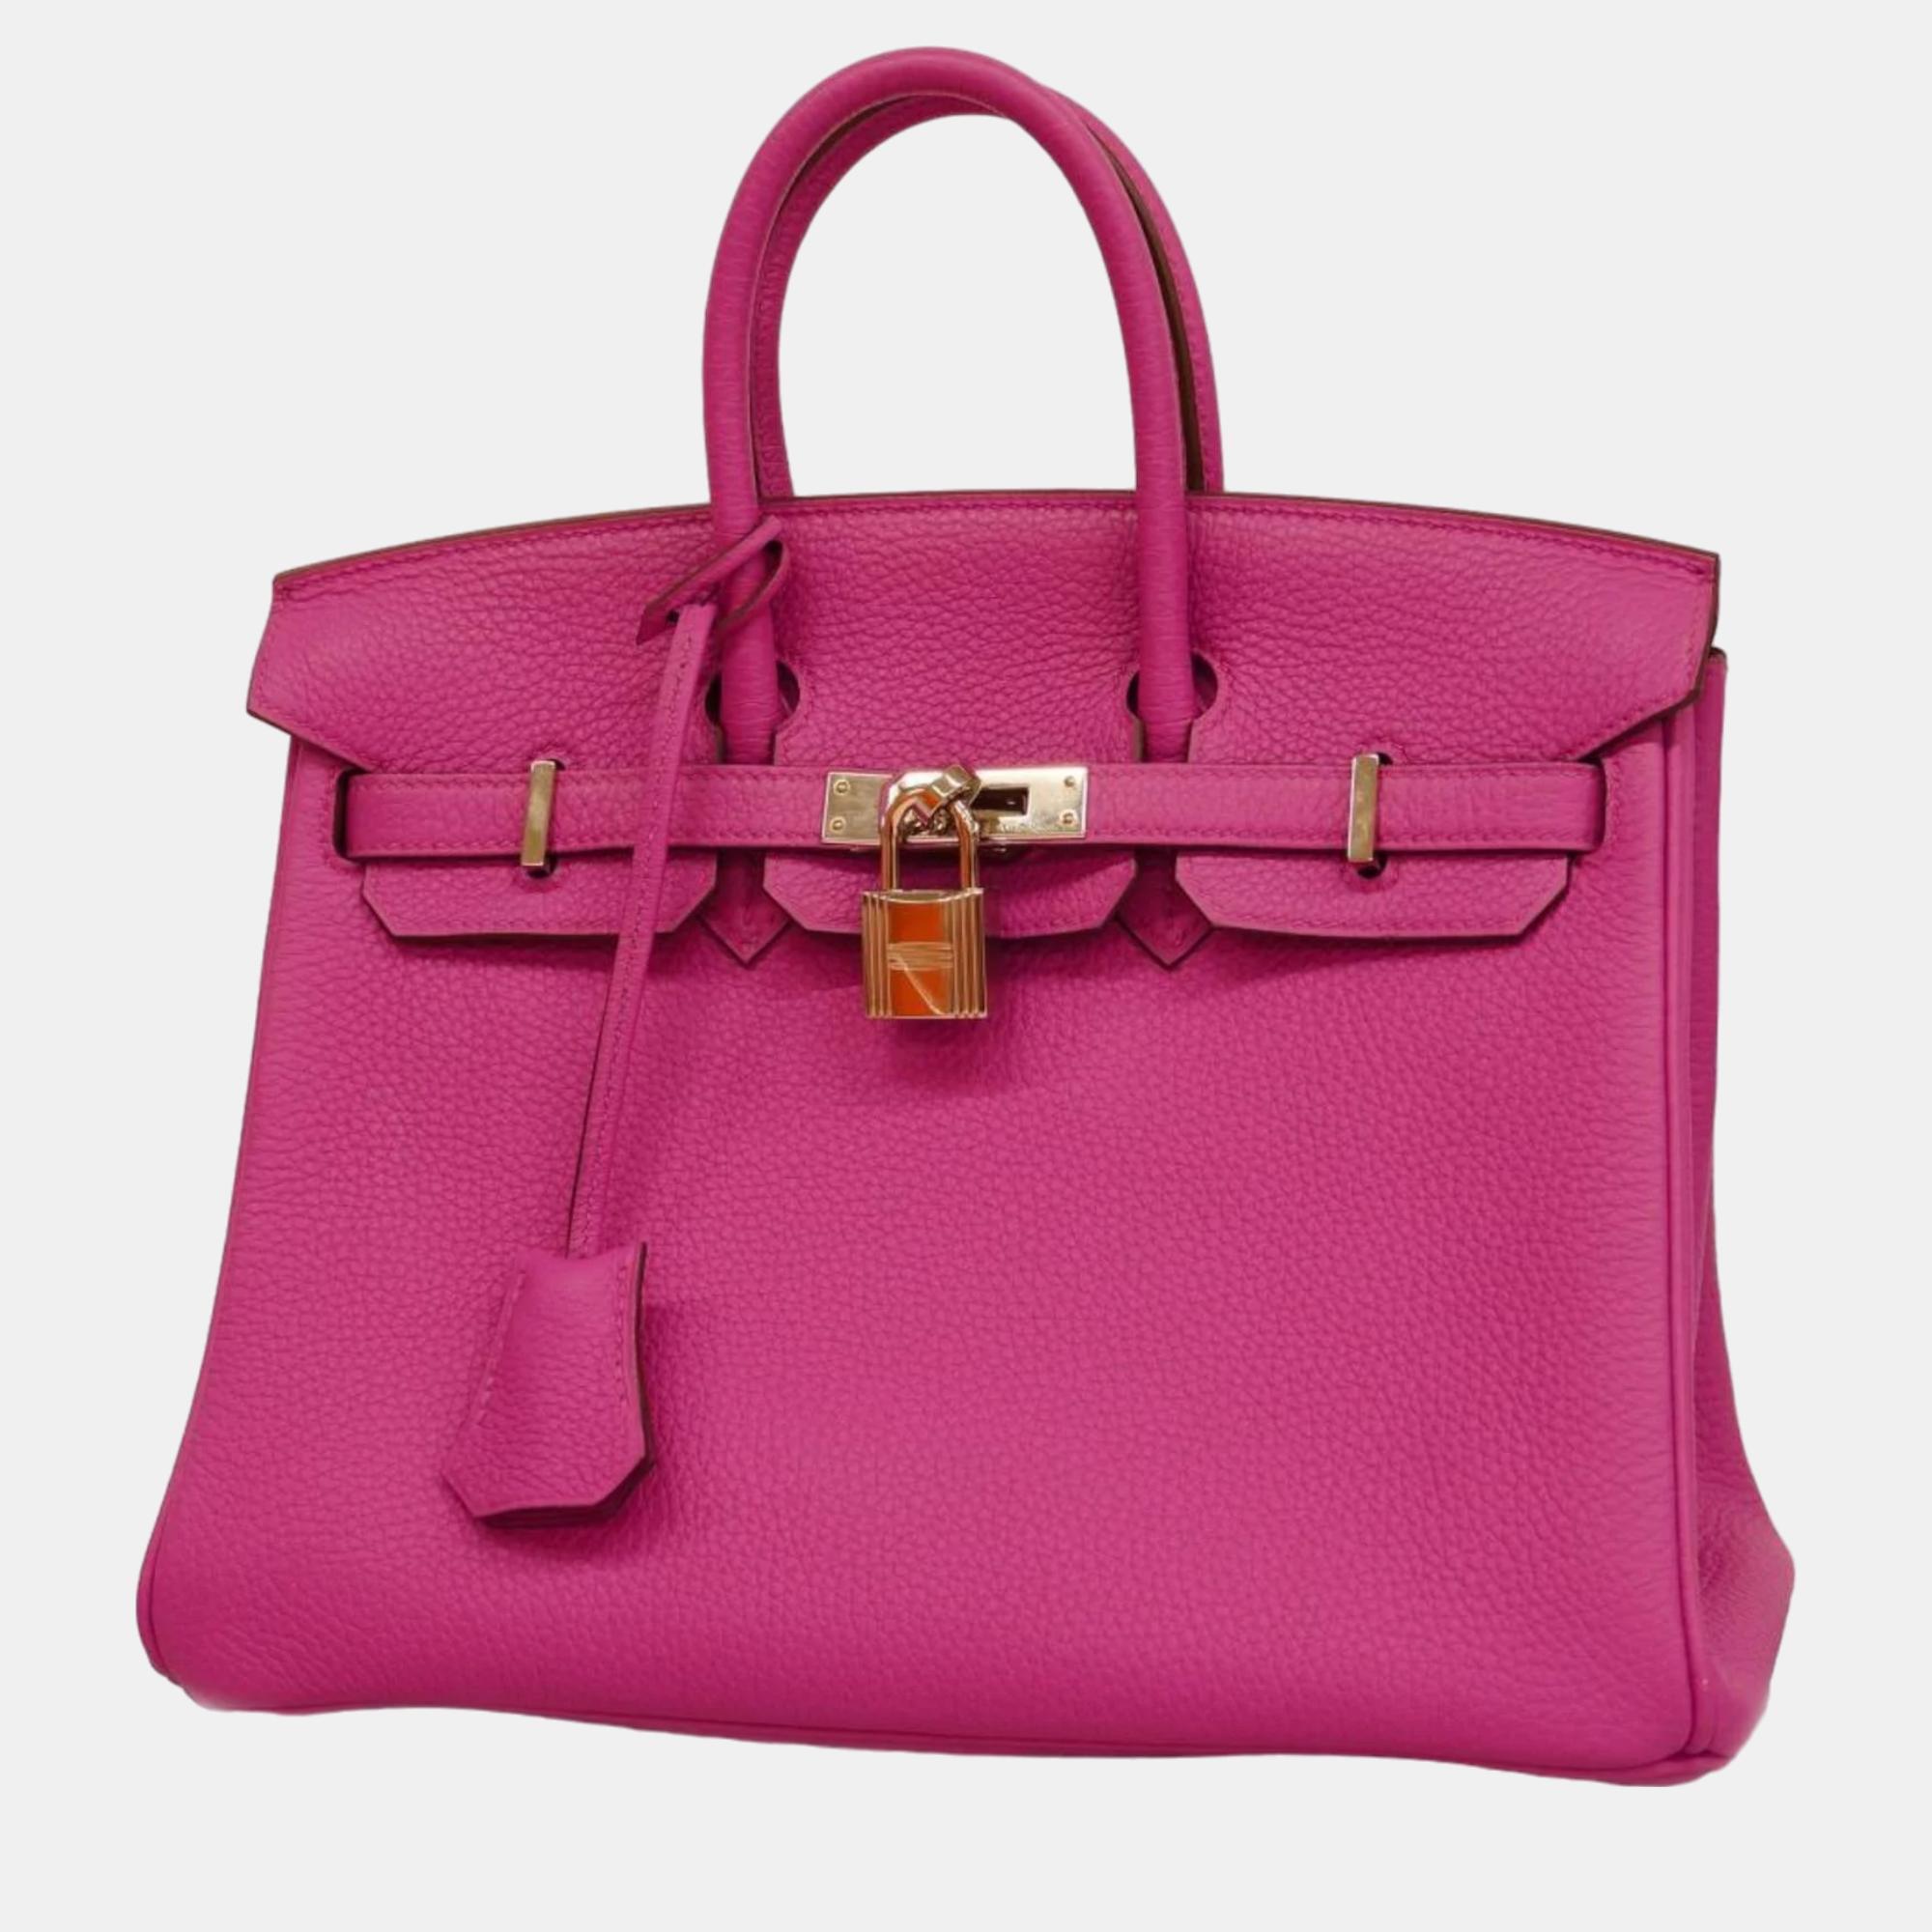 Hermes rose purple togo leather birkin 25 tote bag